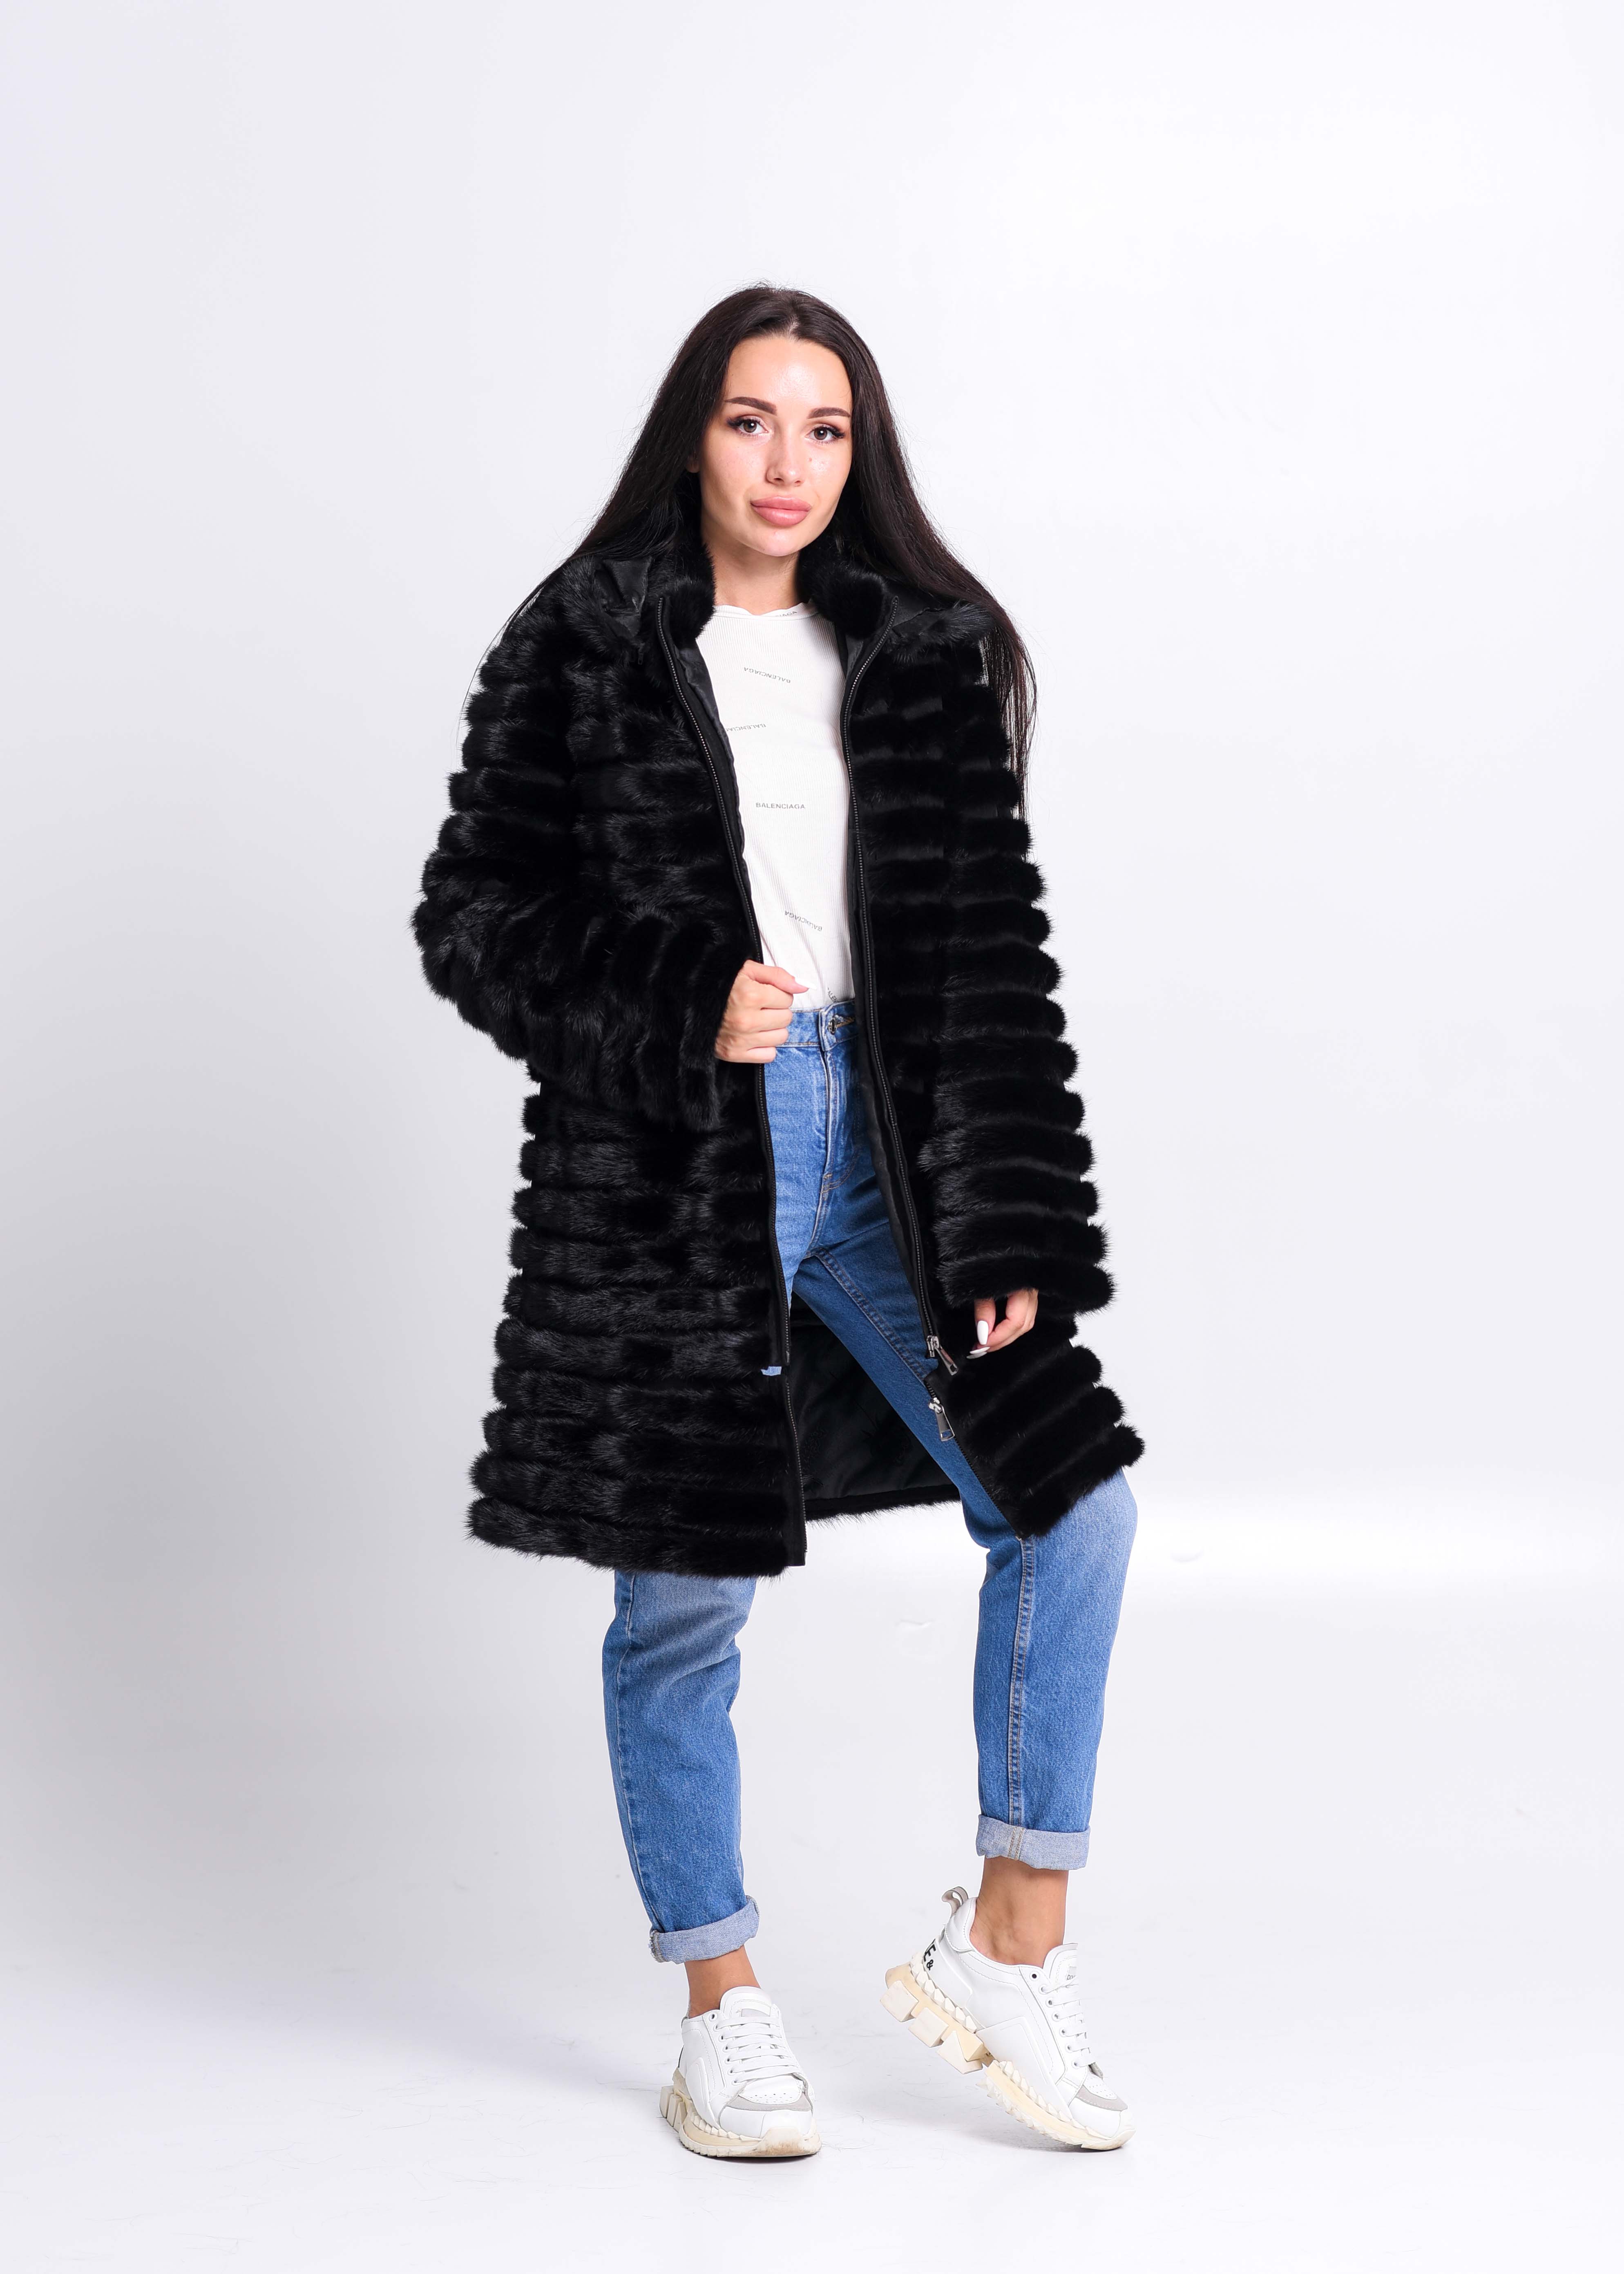 Women's fur coat from mink tails, transformer